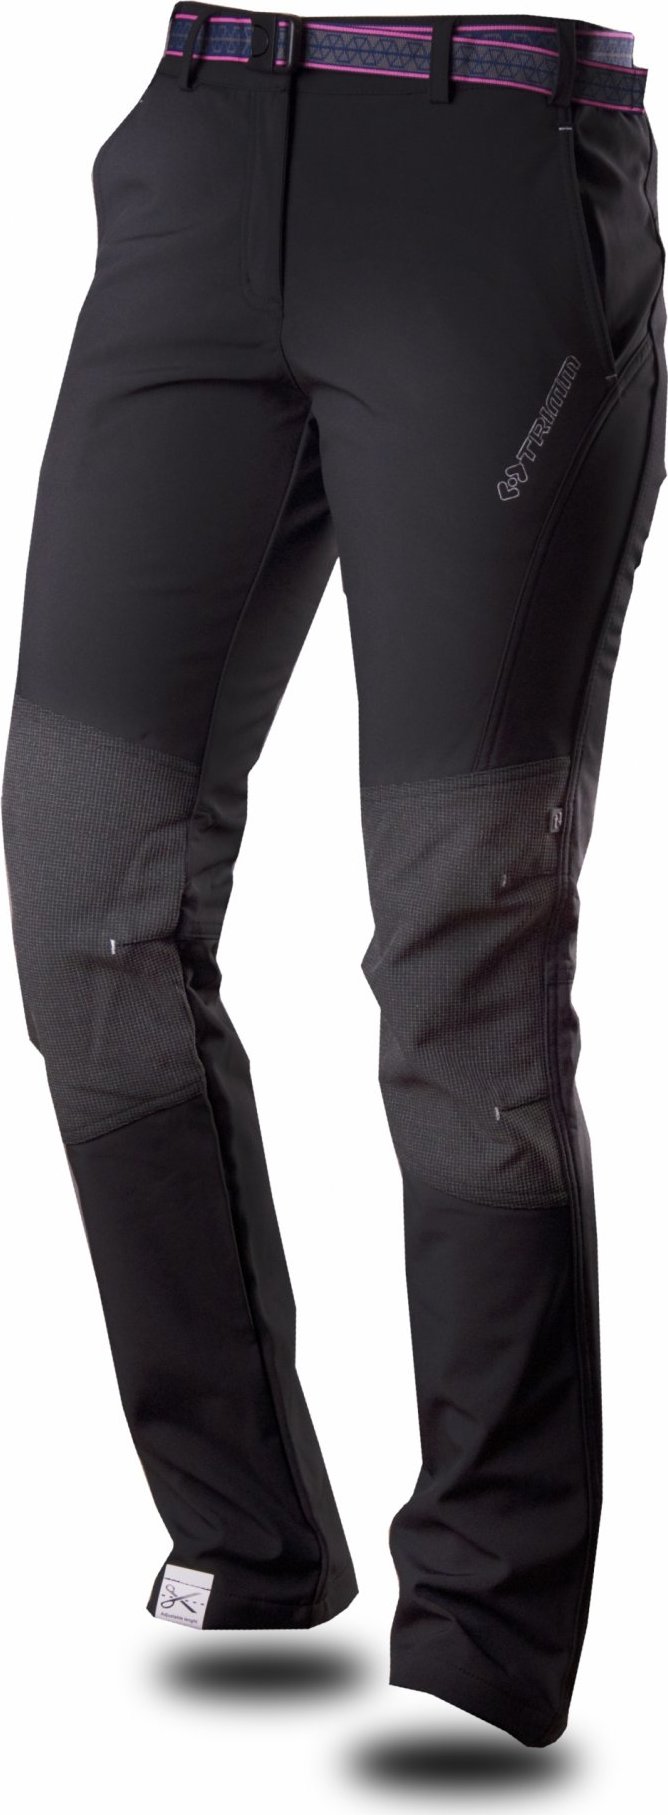 Dámské softshellové kalhoty TRIMM Jurra černé Velikost: XL, Barva: grafit black